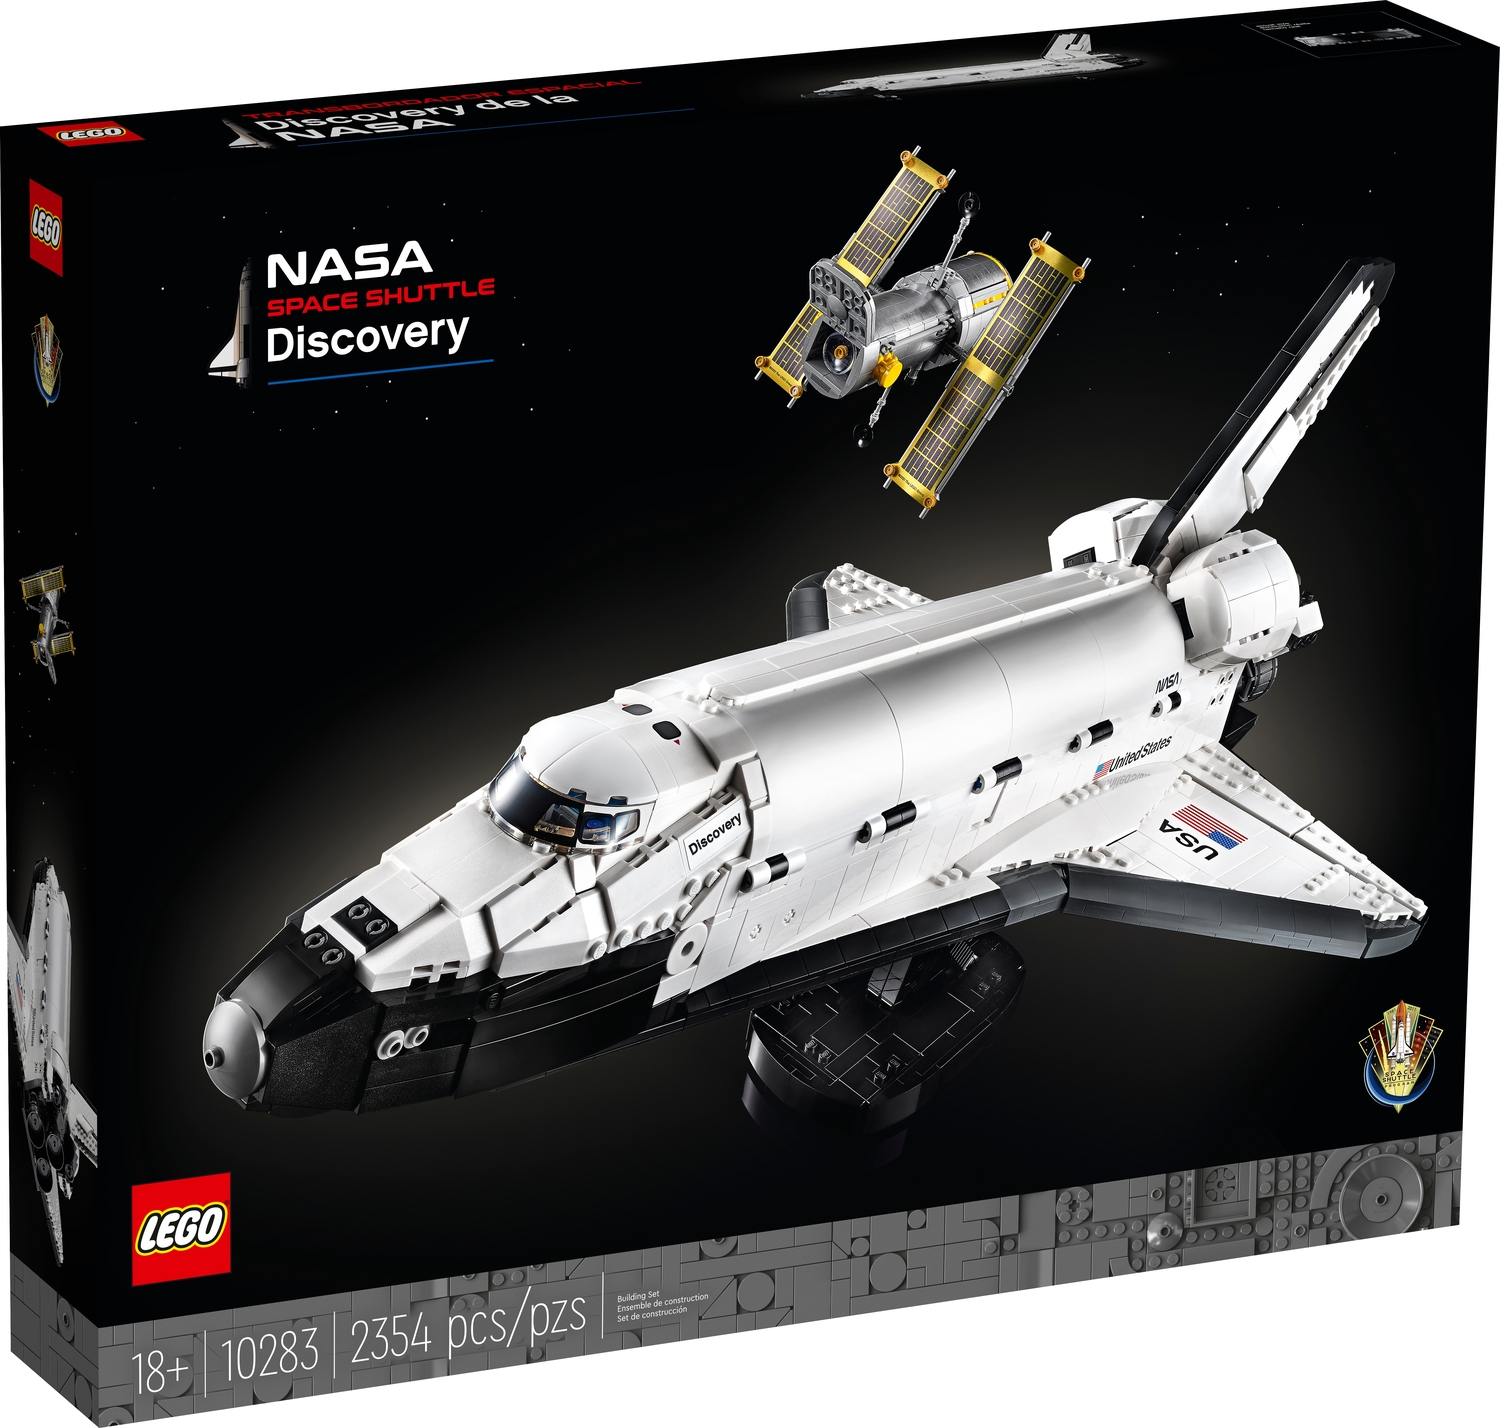 LEGO Creator Expert: NASA Space Shuttle Discovery